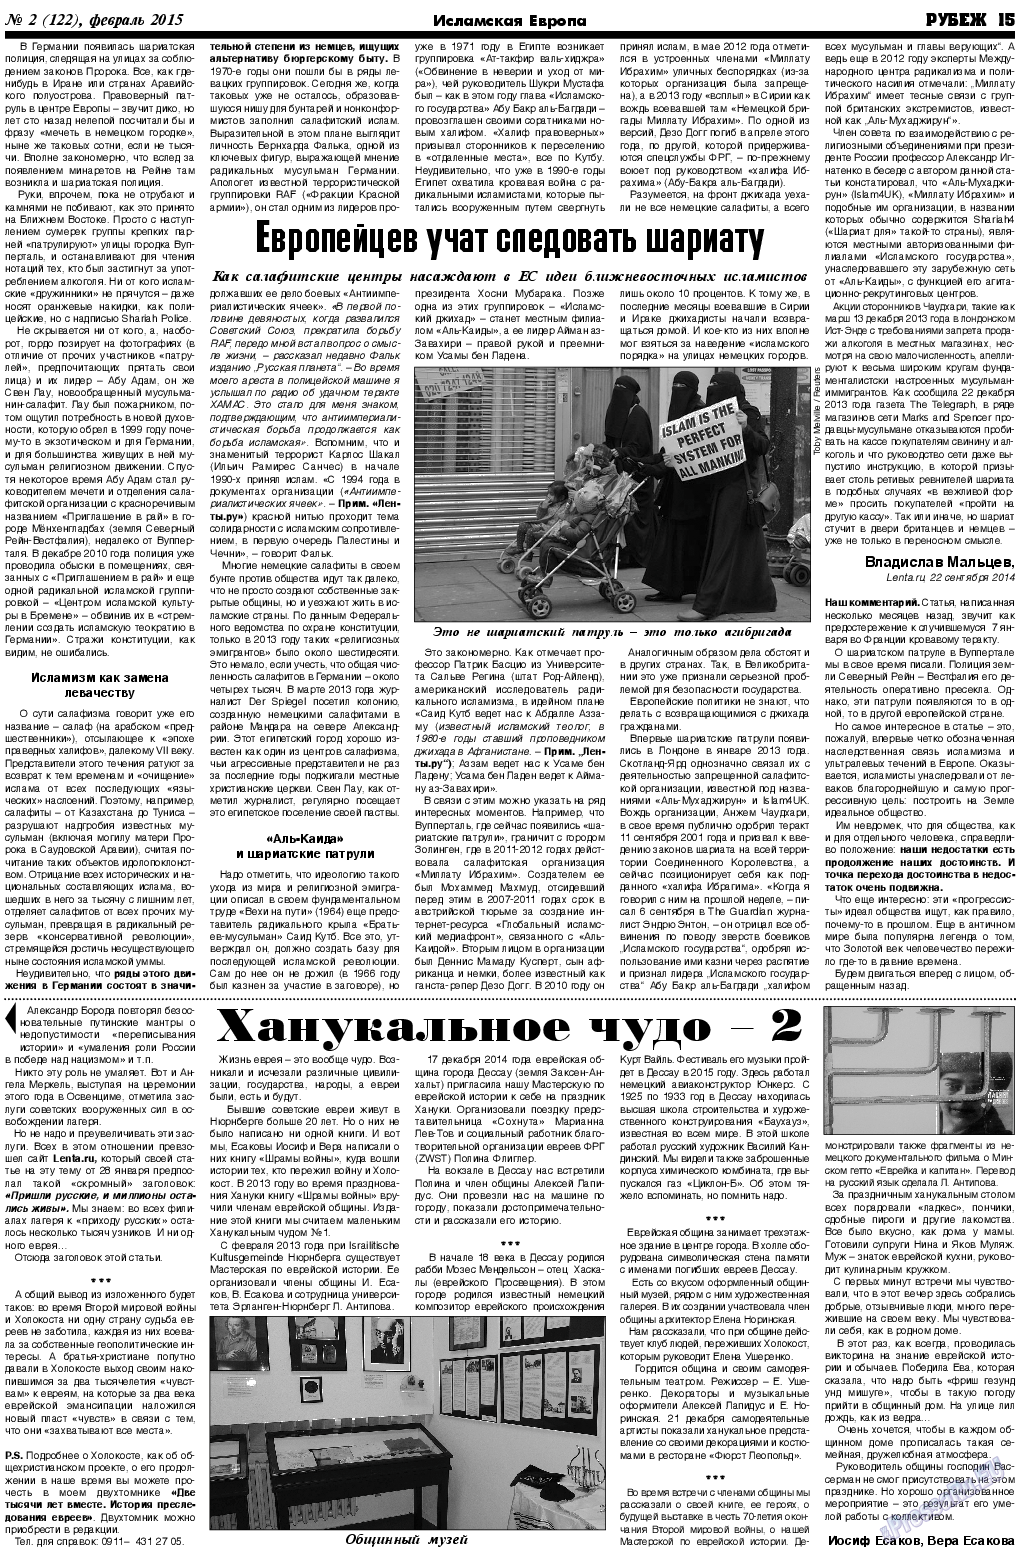 Рубеж, газета. 2015 №2 стр.15